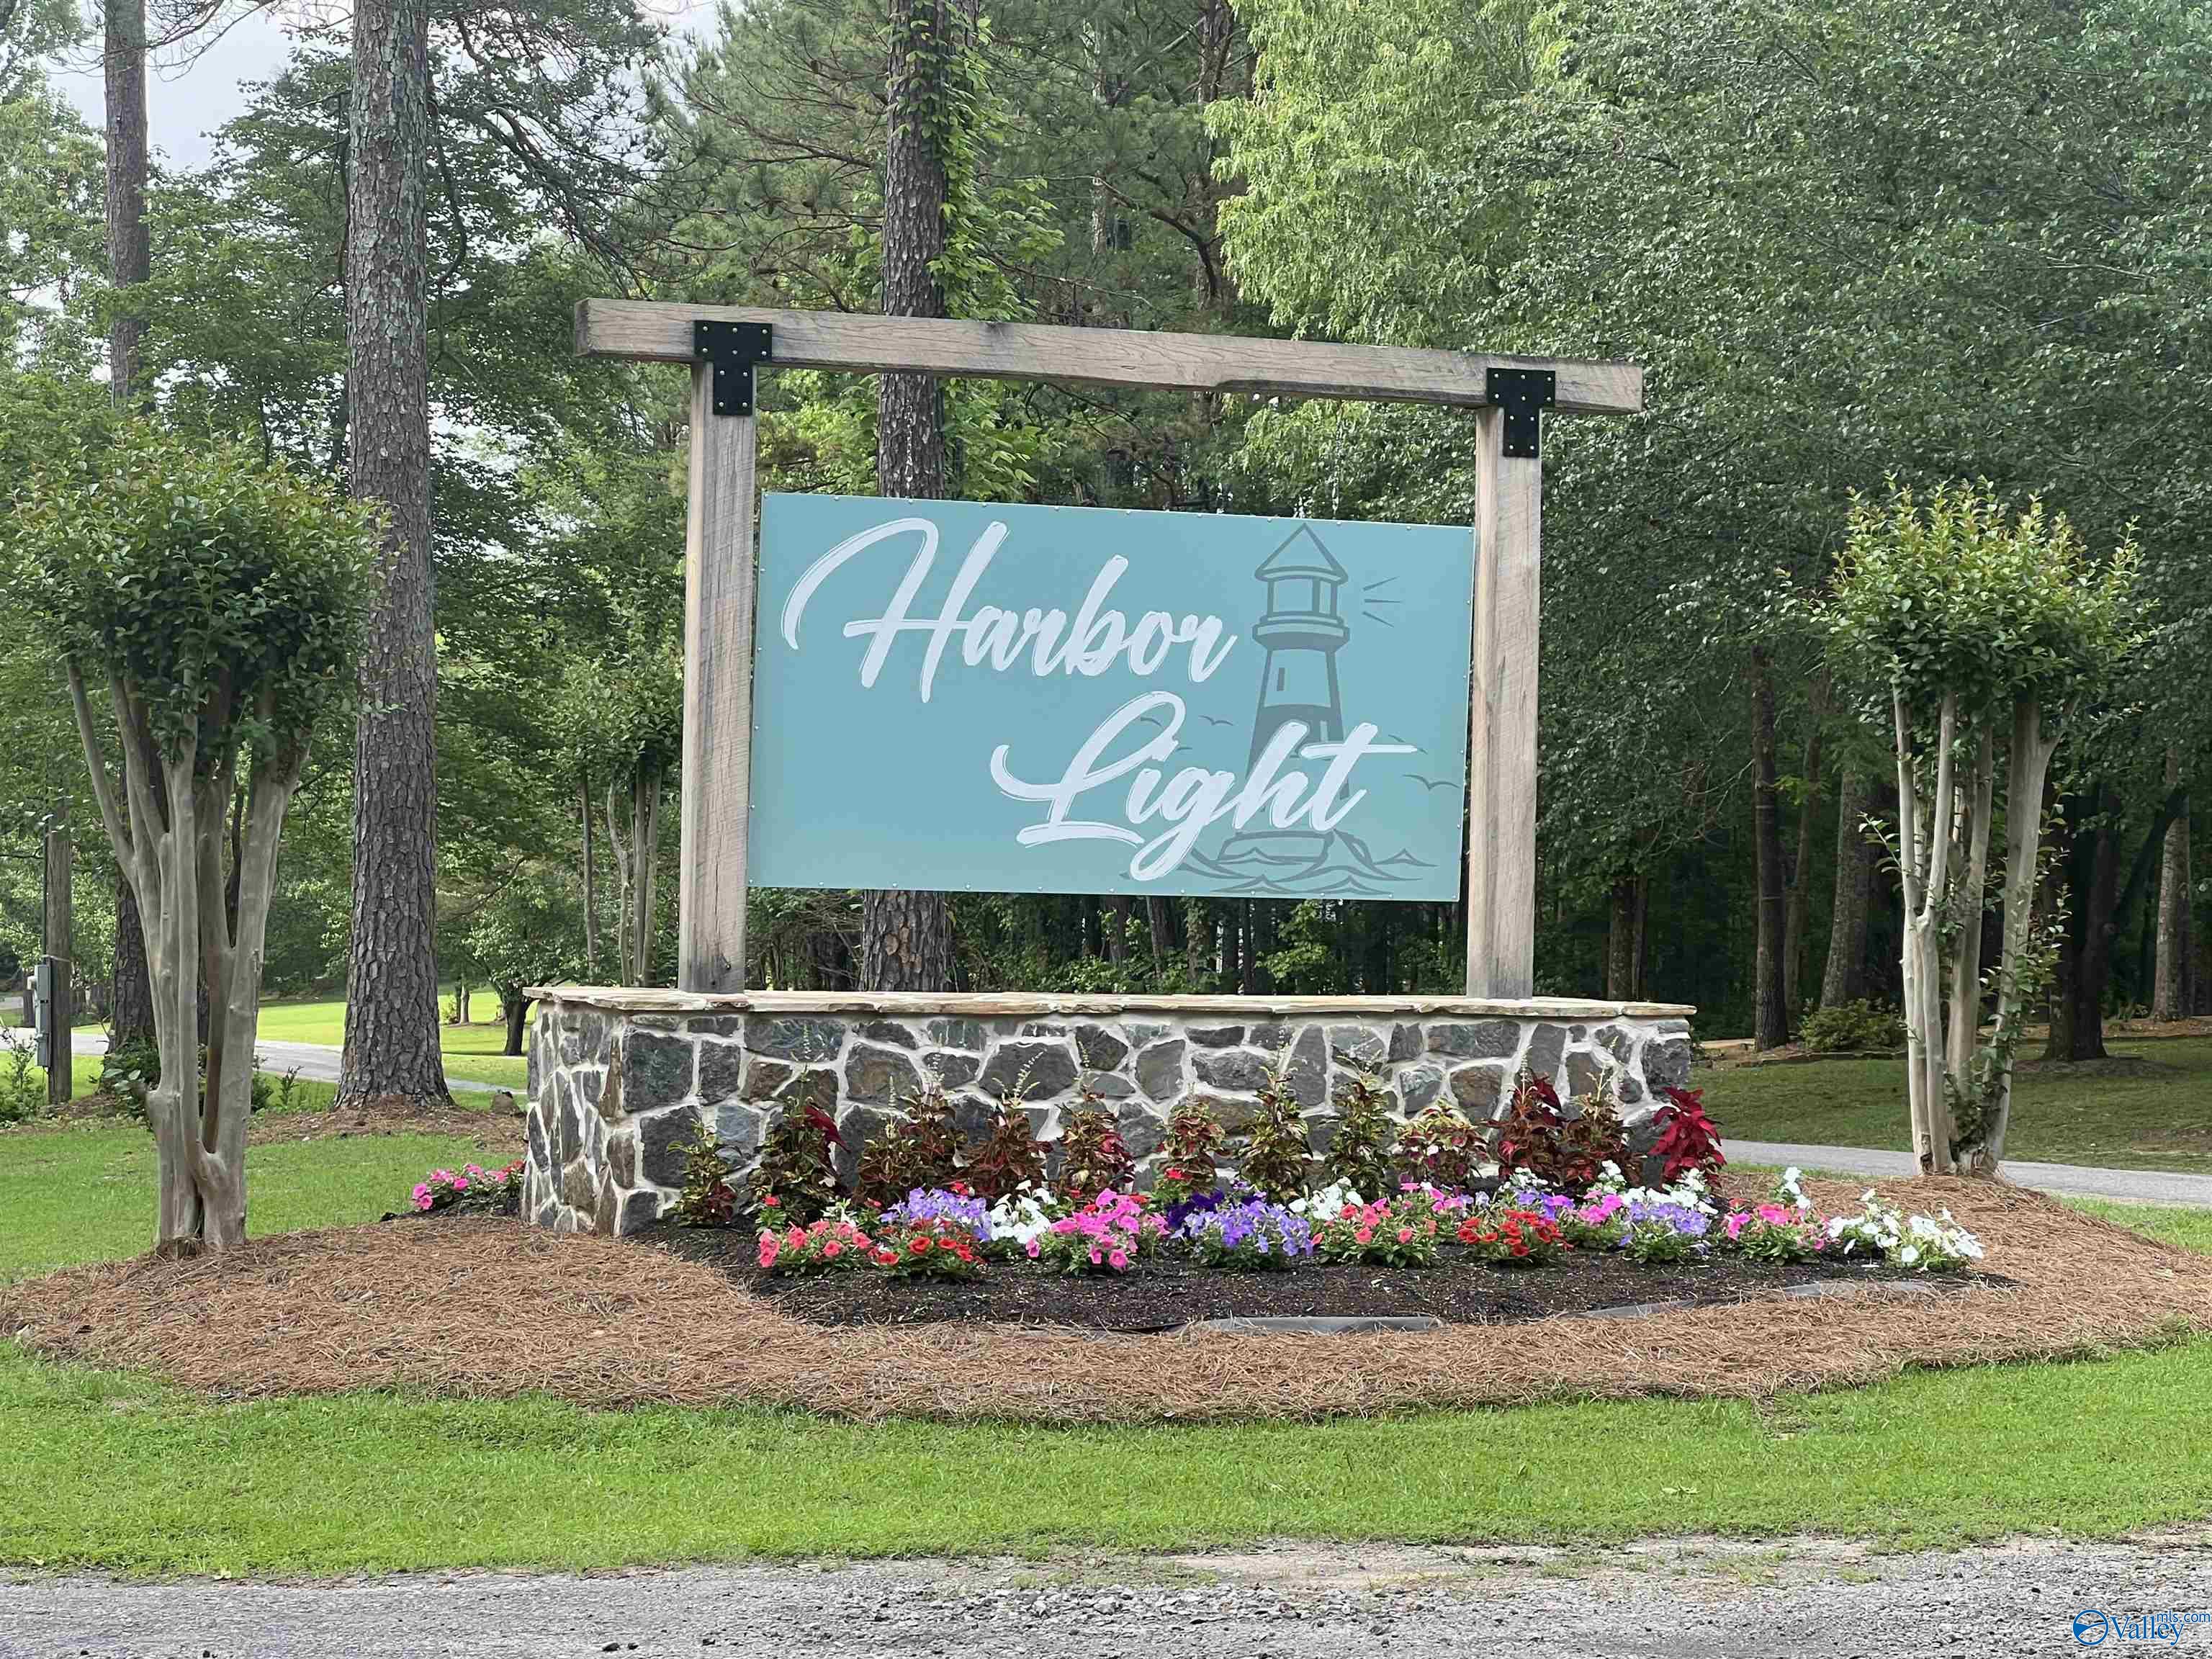 Property: 61 Harbor Loop,Jasper, AL